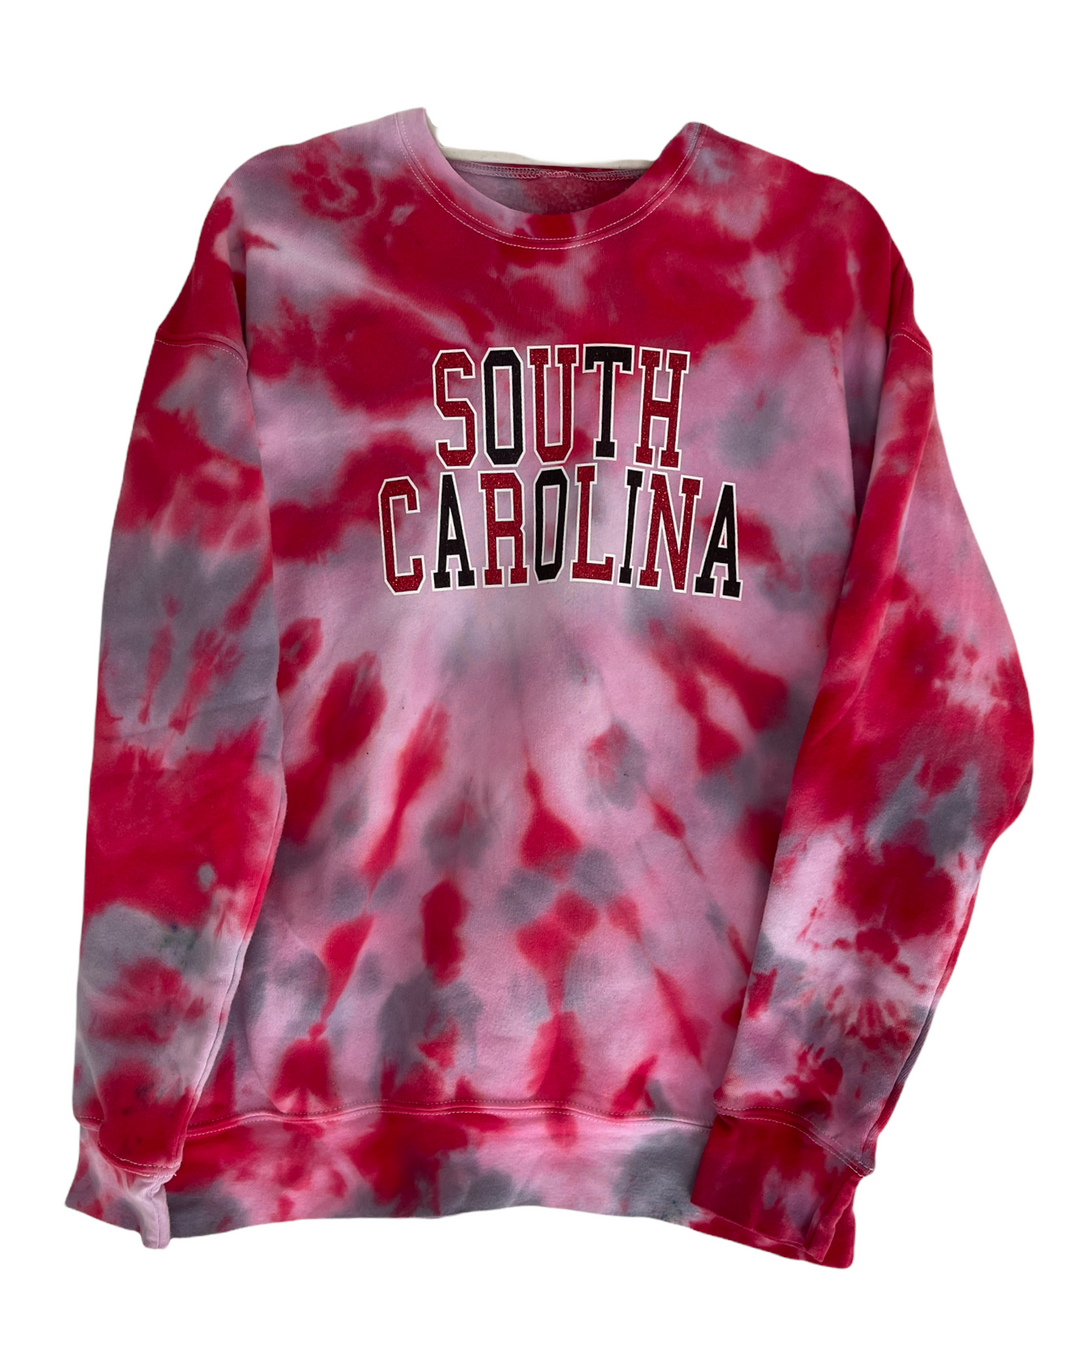 South Carolina Custom Made Sweatshirt